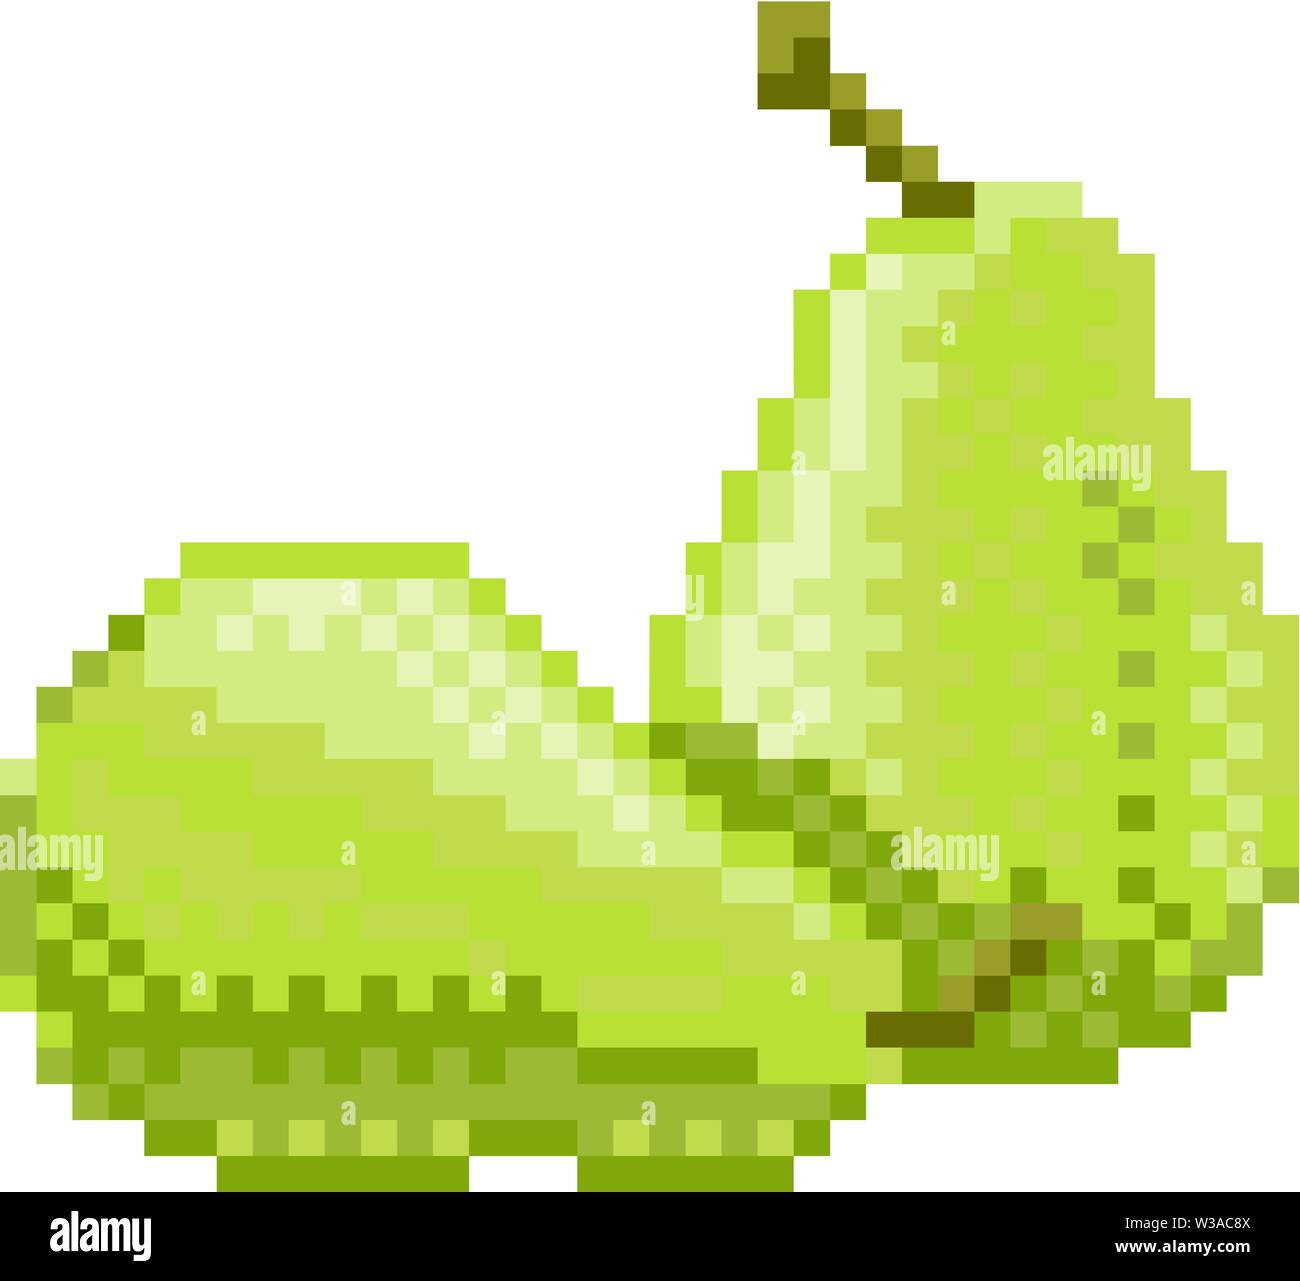 7,208 Pixel Art Fruits Images, Stock Photos, 3D objects, & Vectors